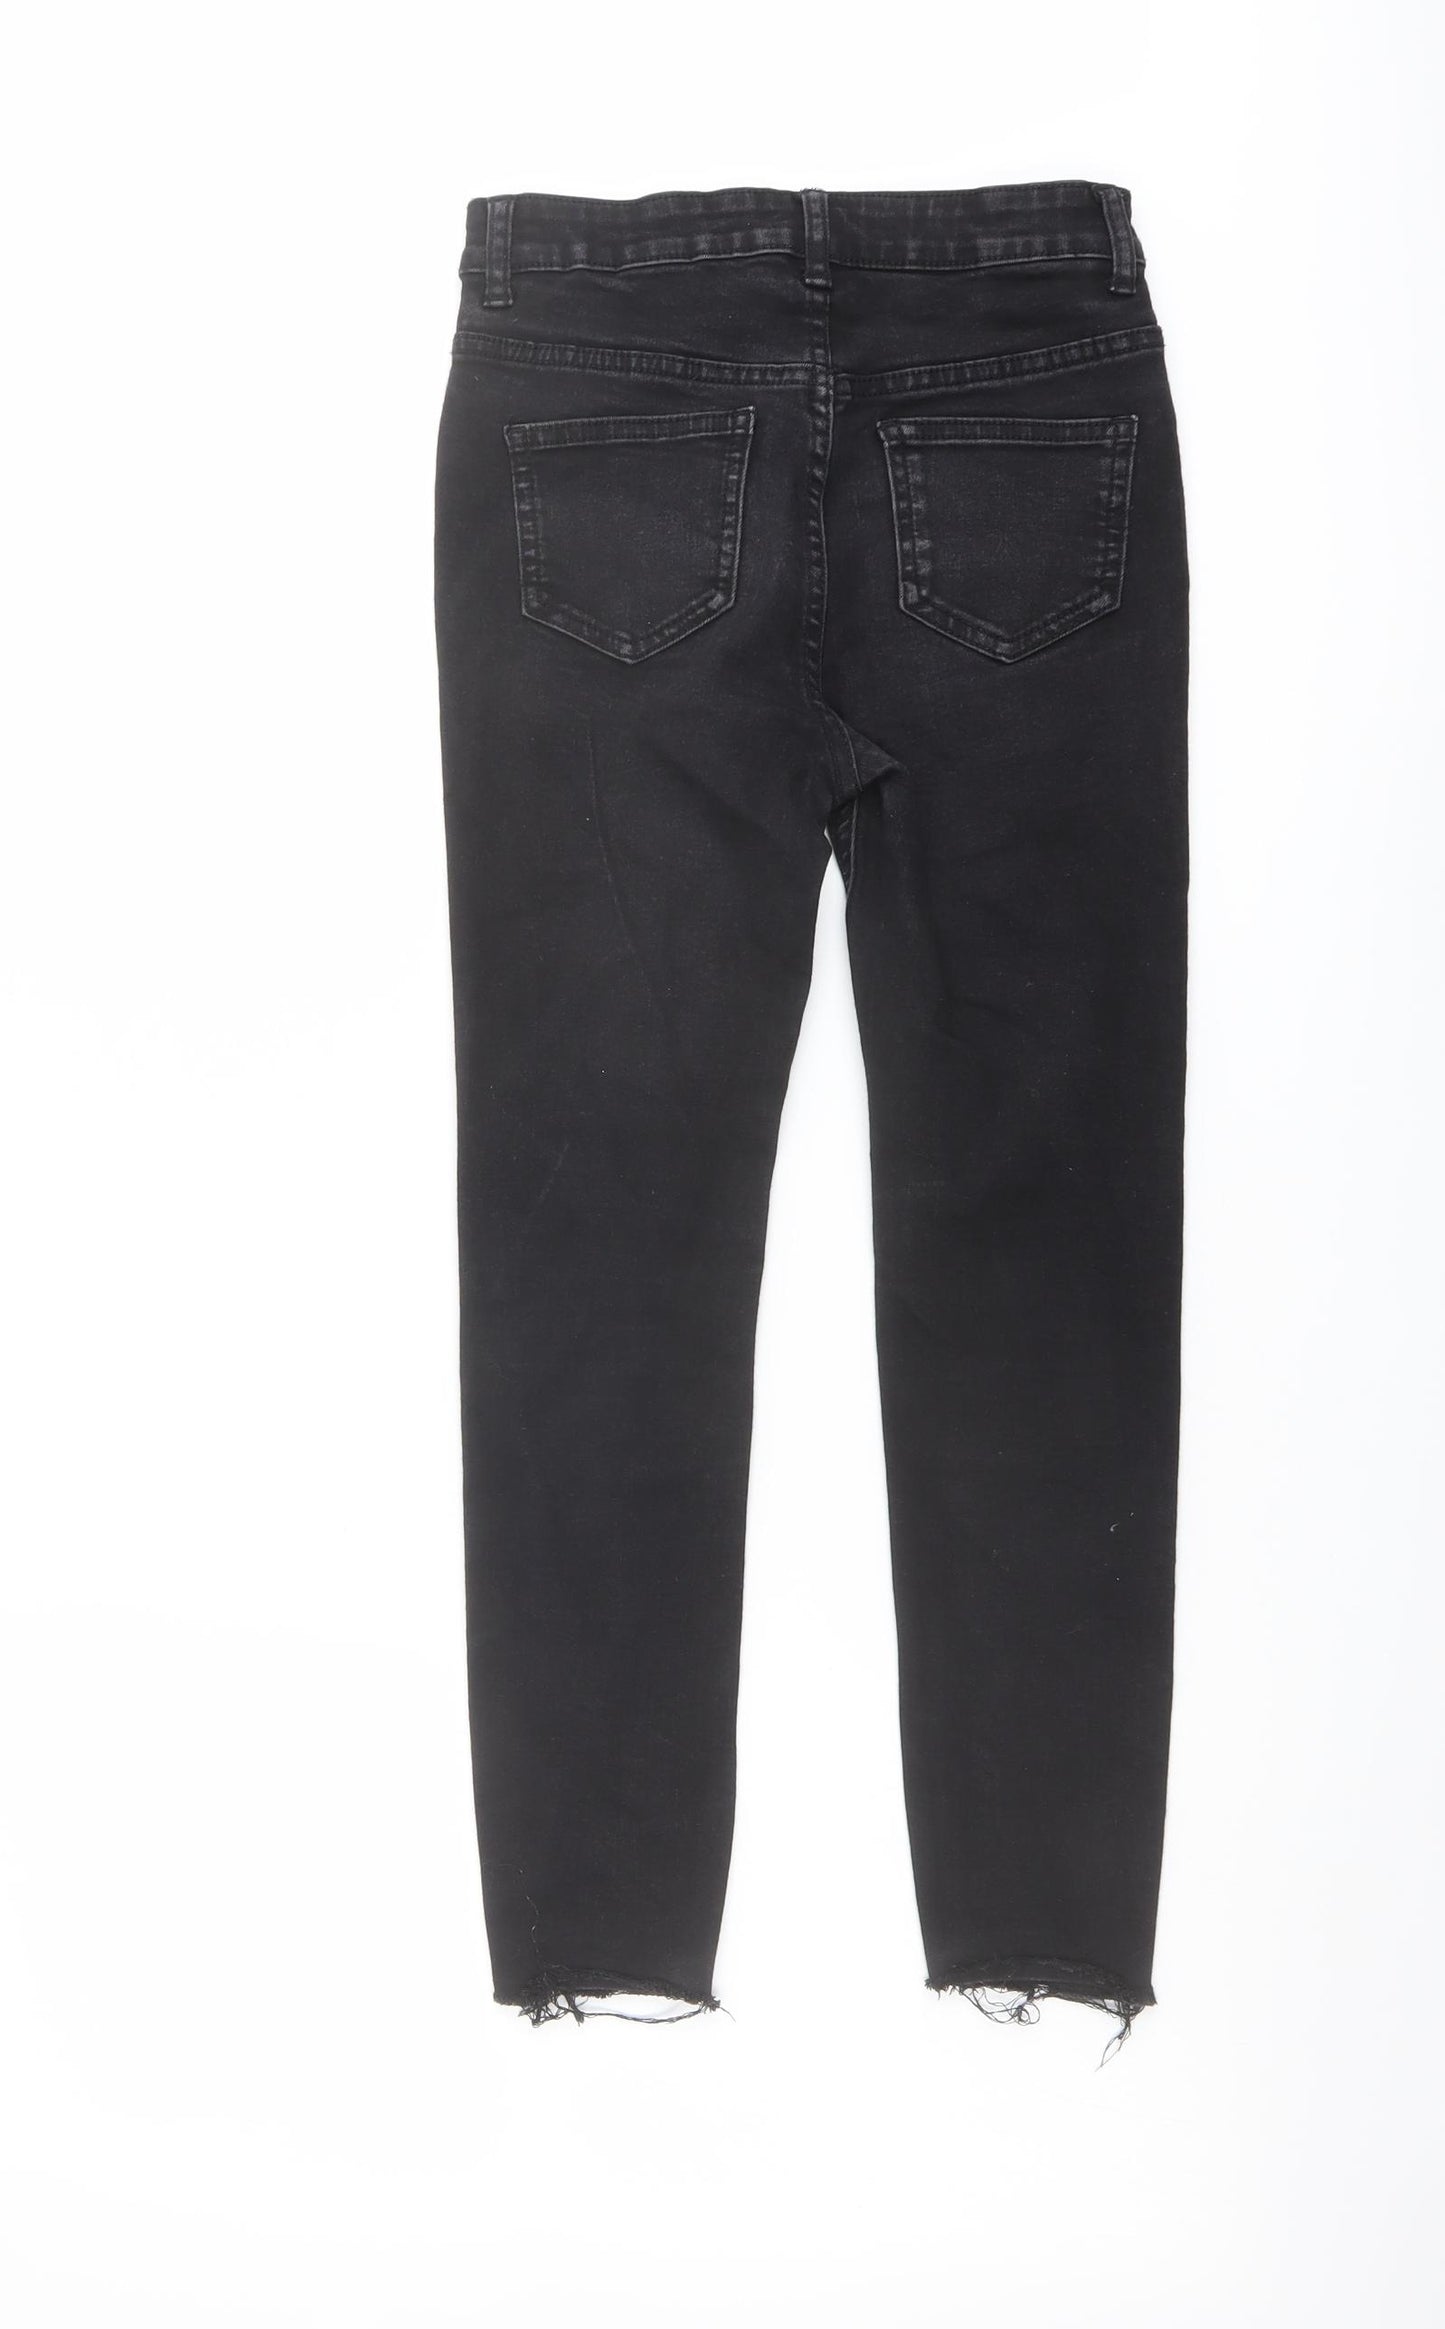 George Girls Grey Cotton Skinny Jeans Size 9-10 Years Regular Button - Distressed Hem